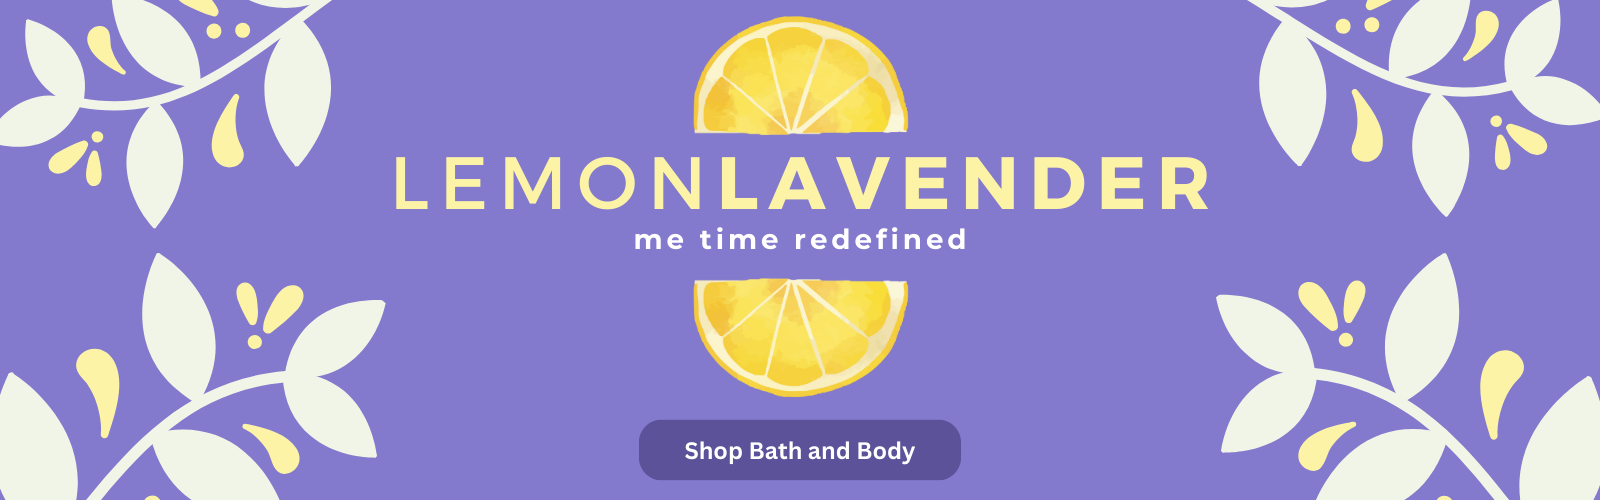 Floral graphics and lemon slices surrounding the Lemon Lavender text on a purple background. 